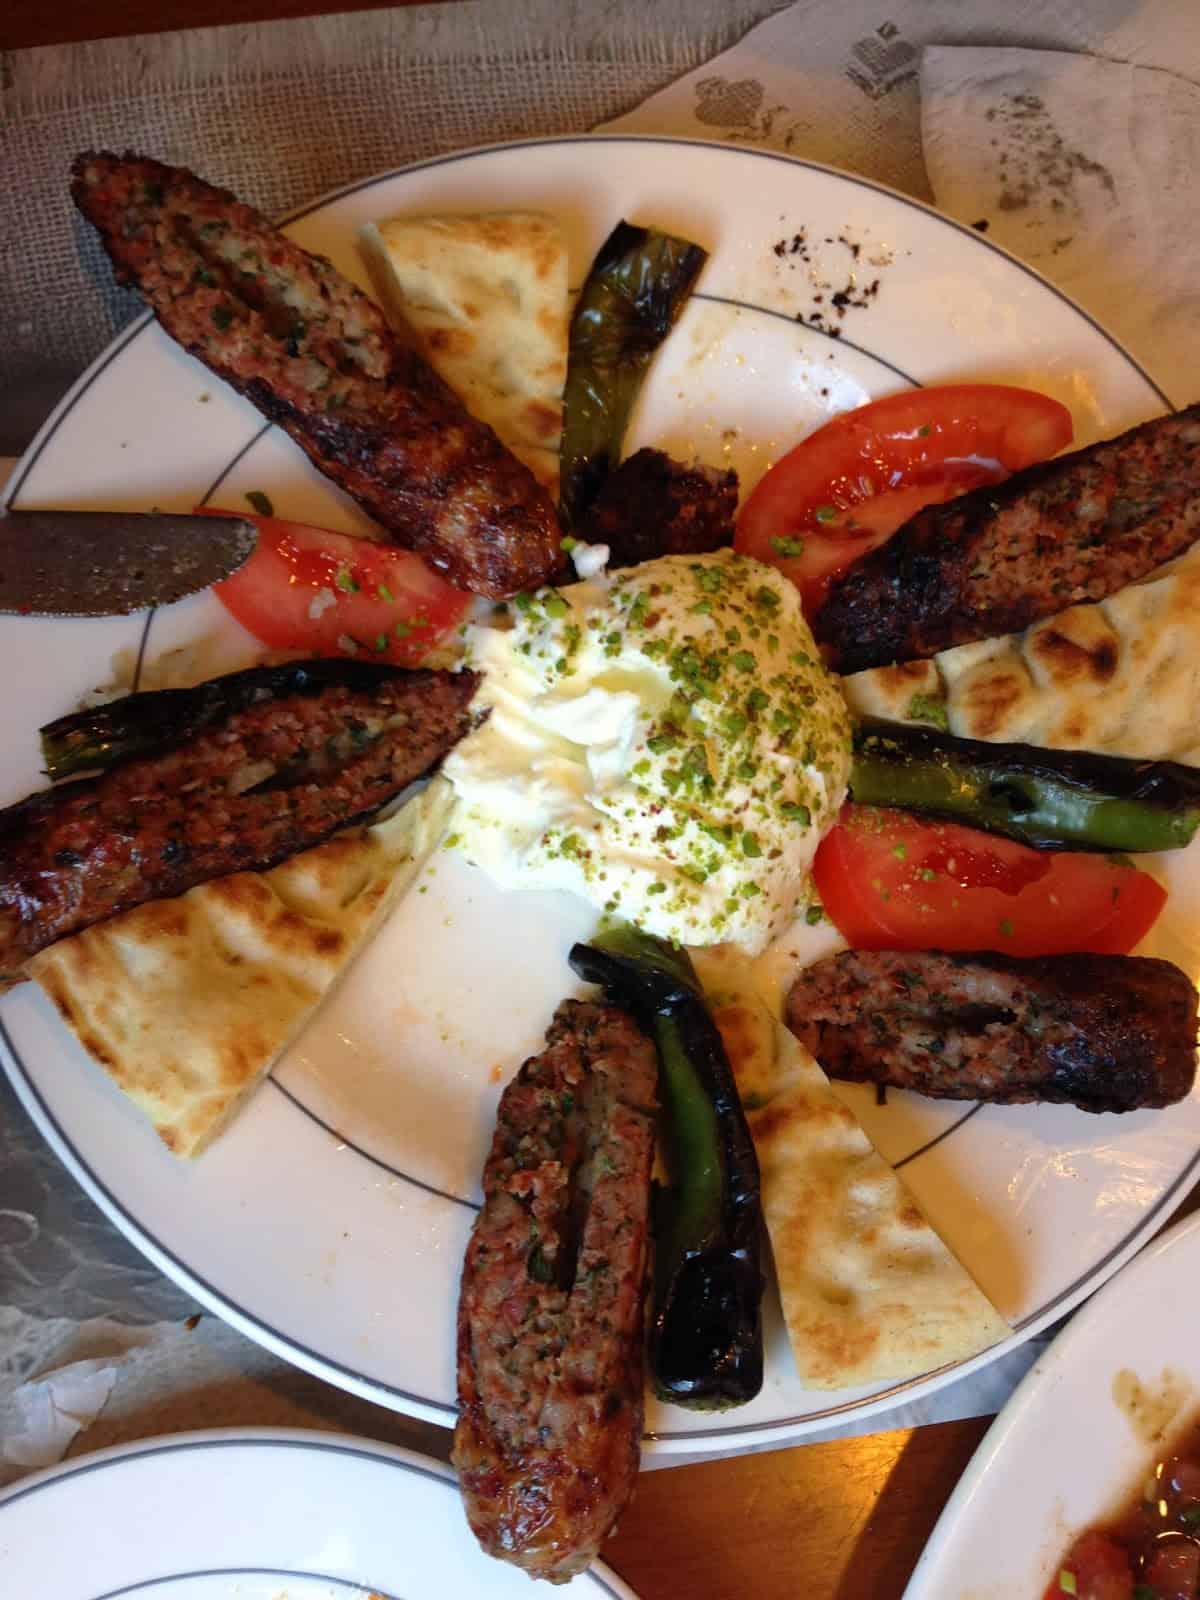 Şeftali kebabı at Çiya in Moda, Kadıköy, İstanbul, Turkey